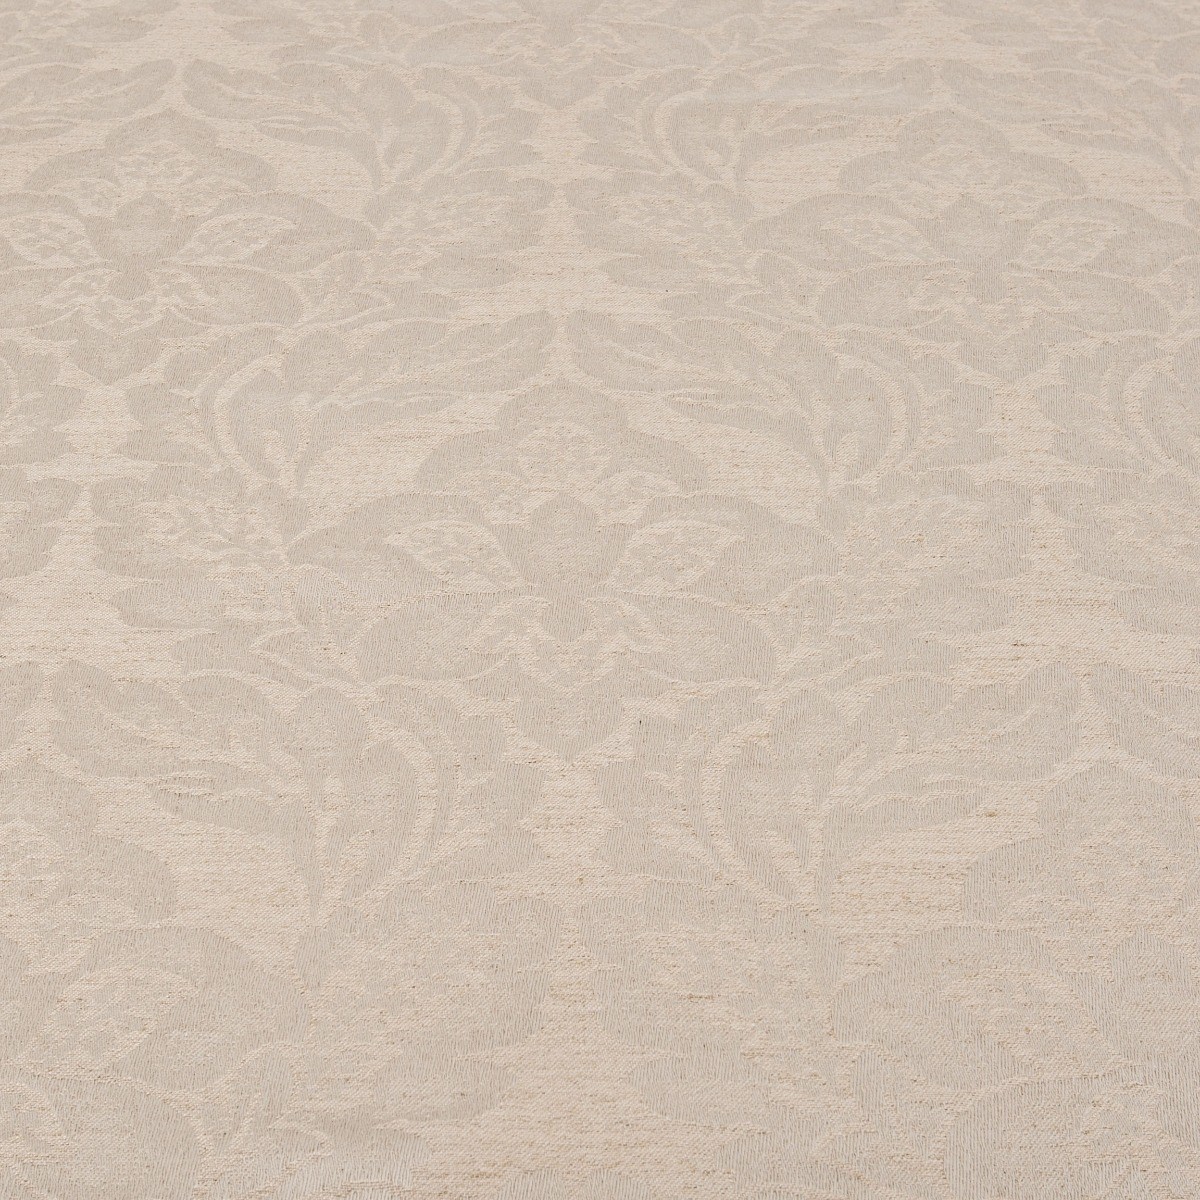  Портьерная ткань CHARME BEIGE, ширина 140 см  - Фото